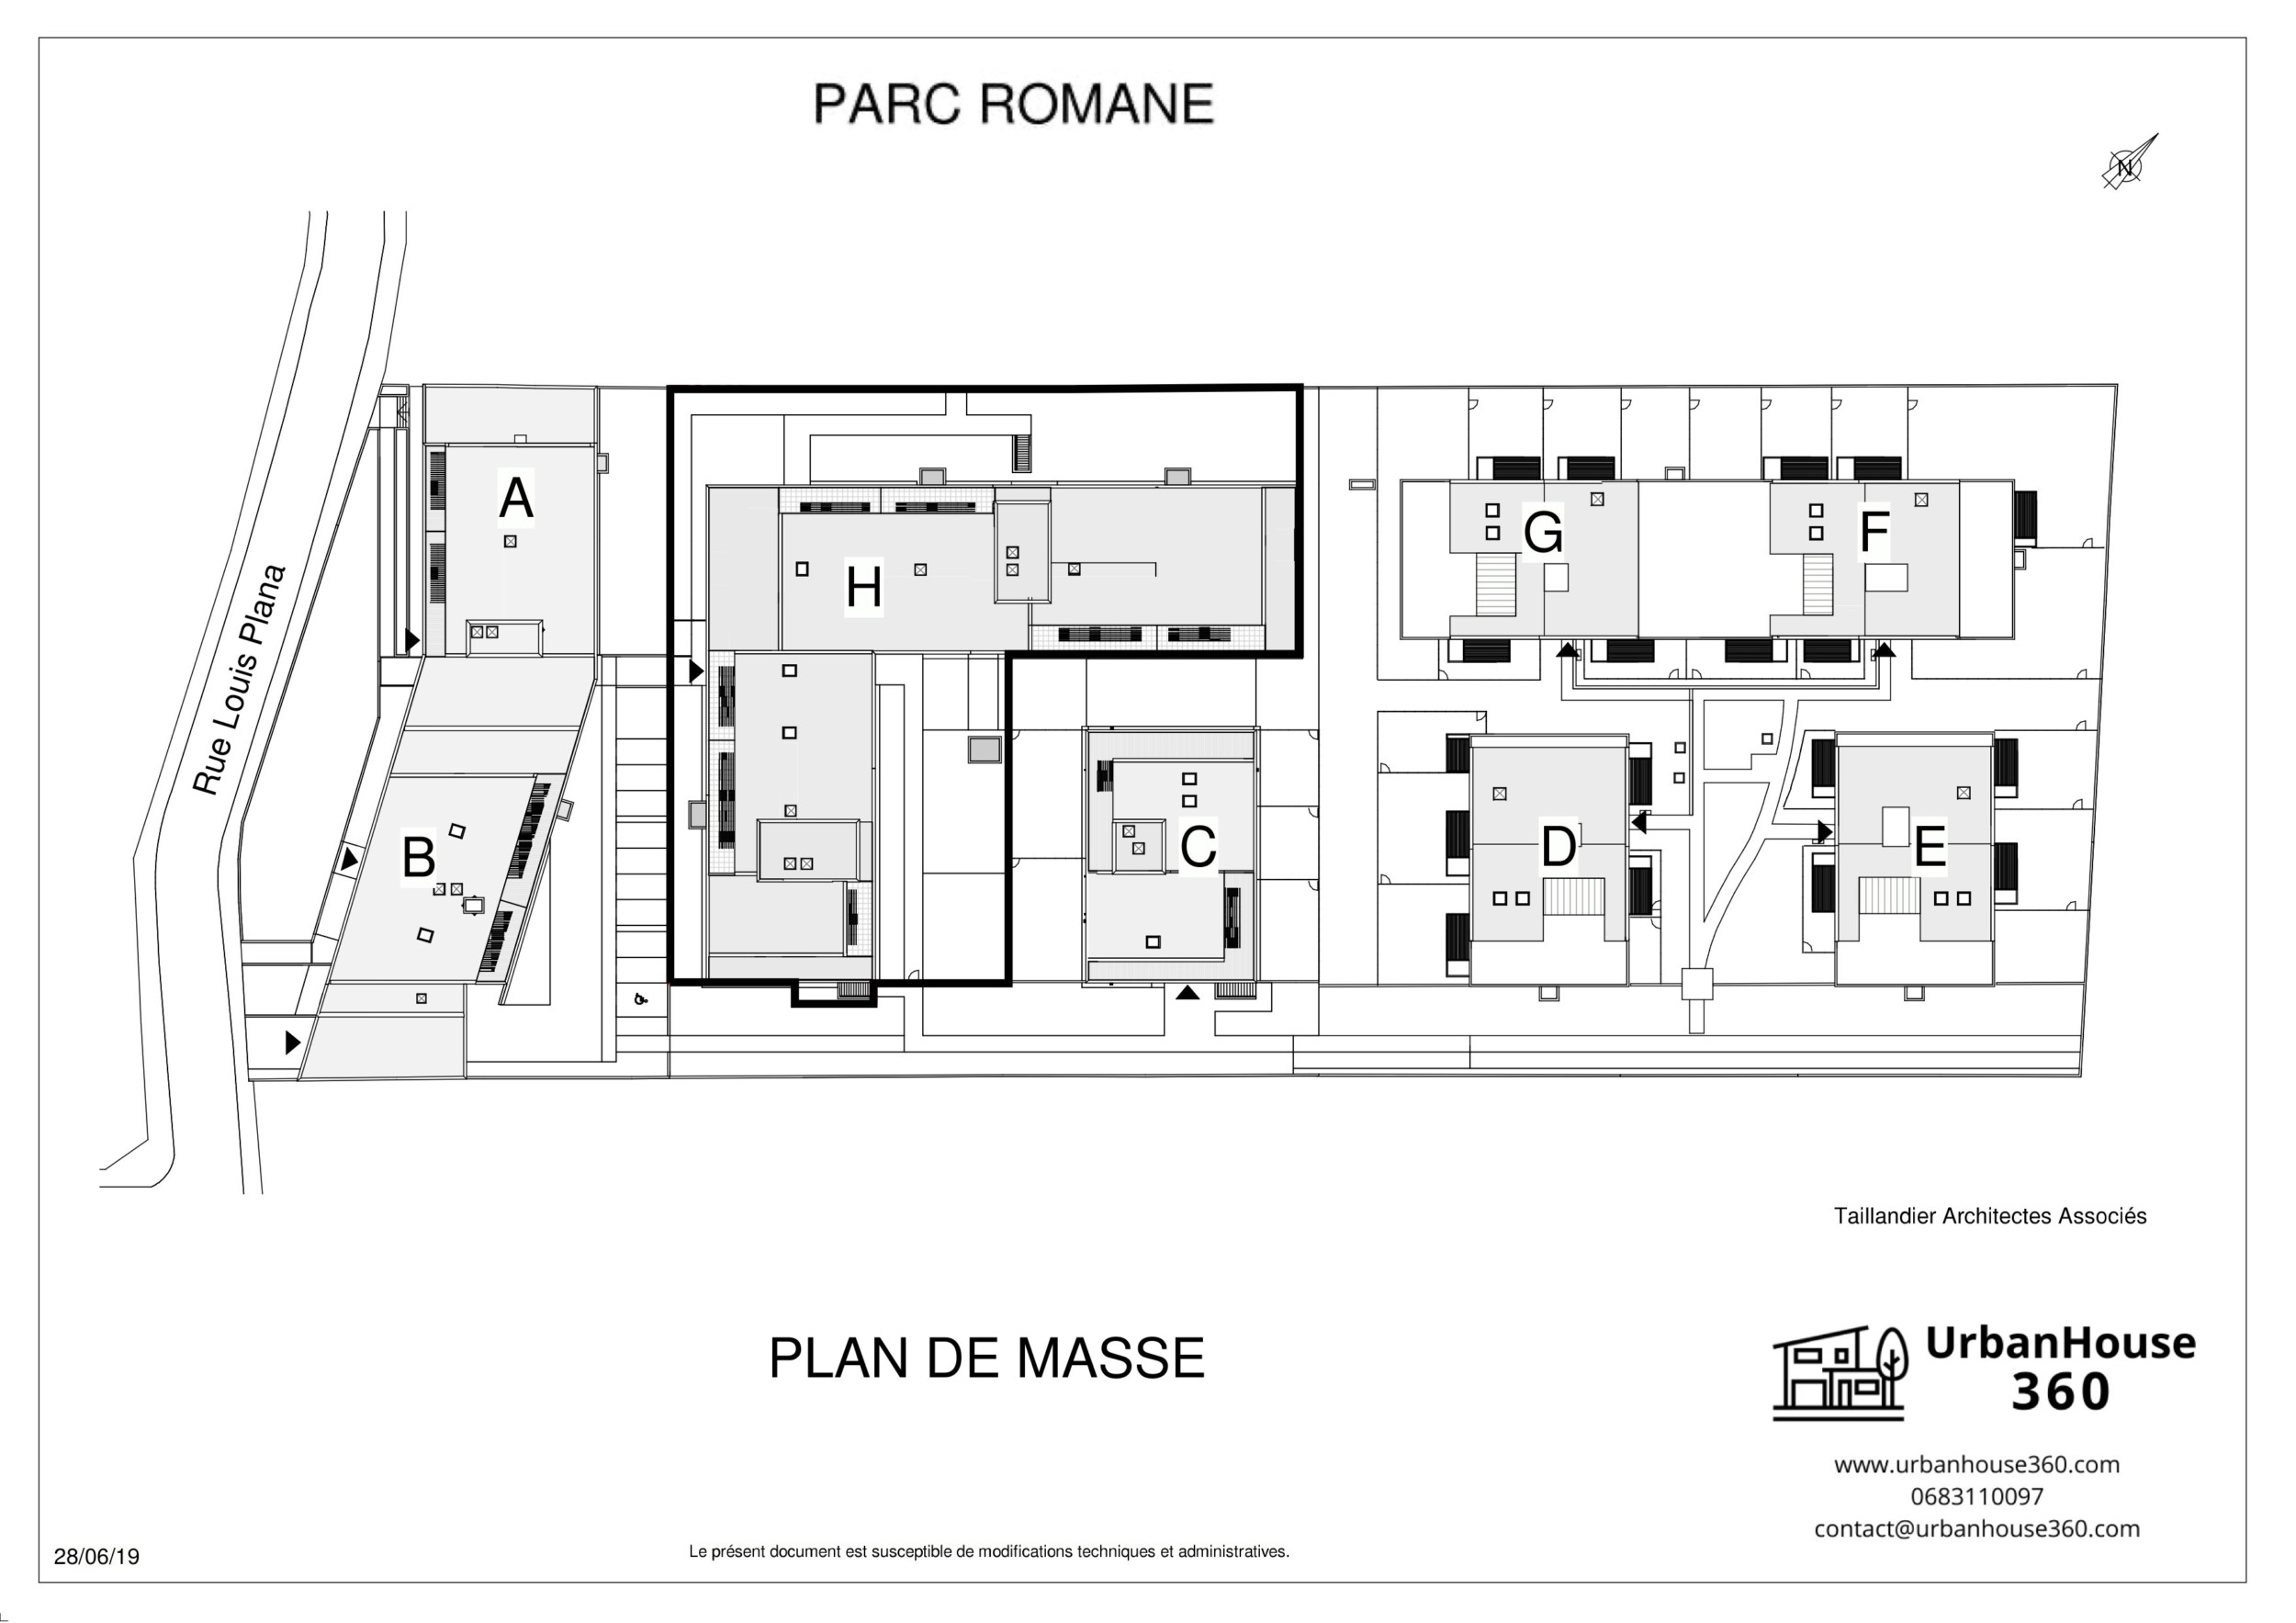 UrbanHouse360-plan_de_masse-parc_romane